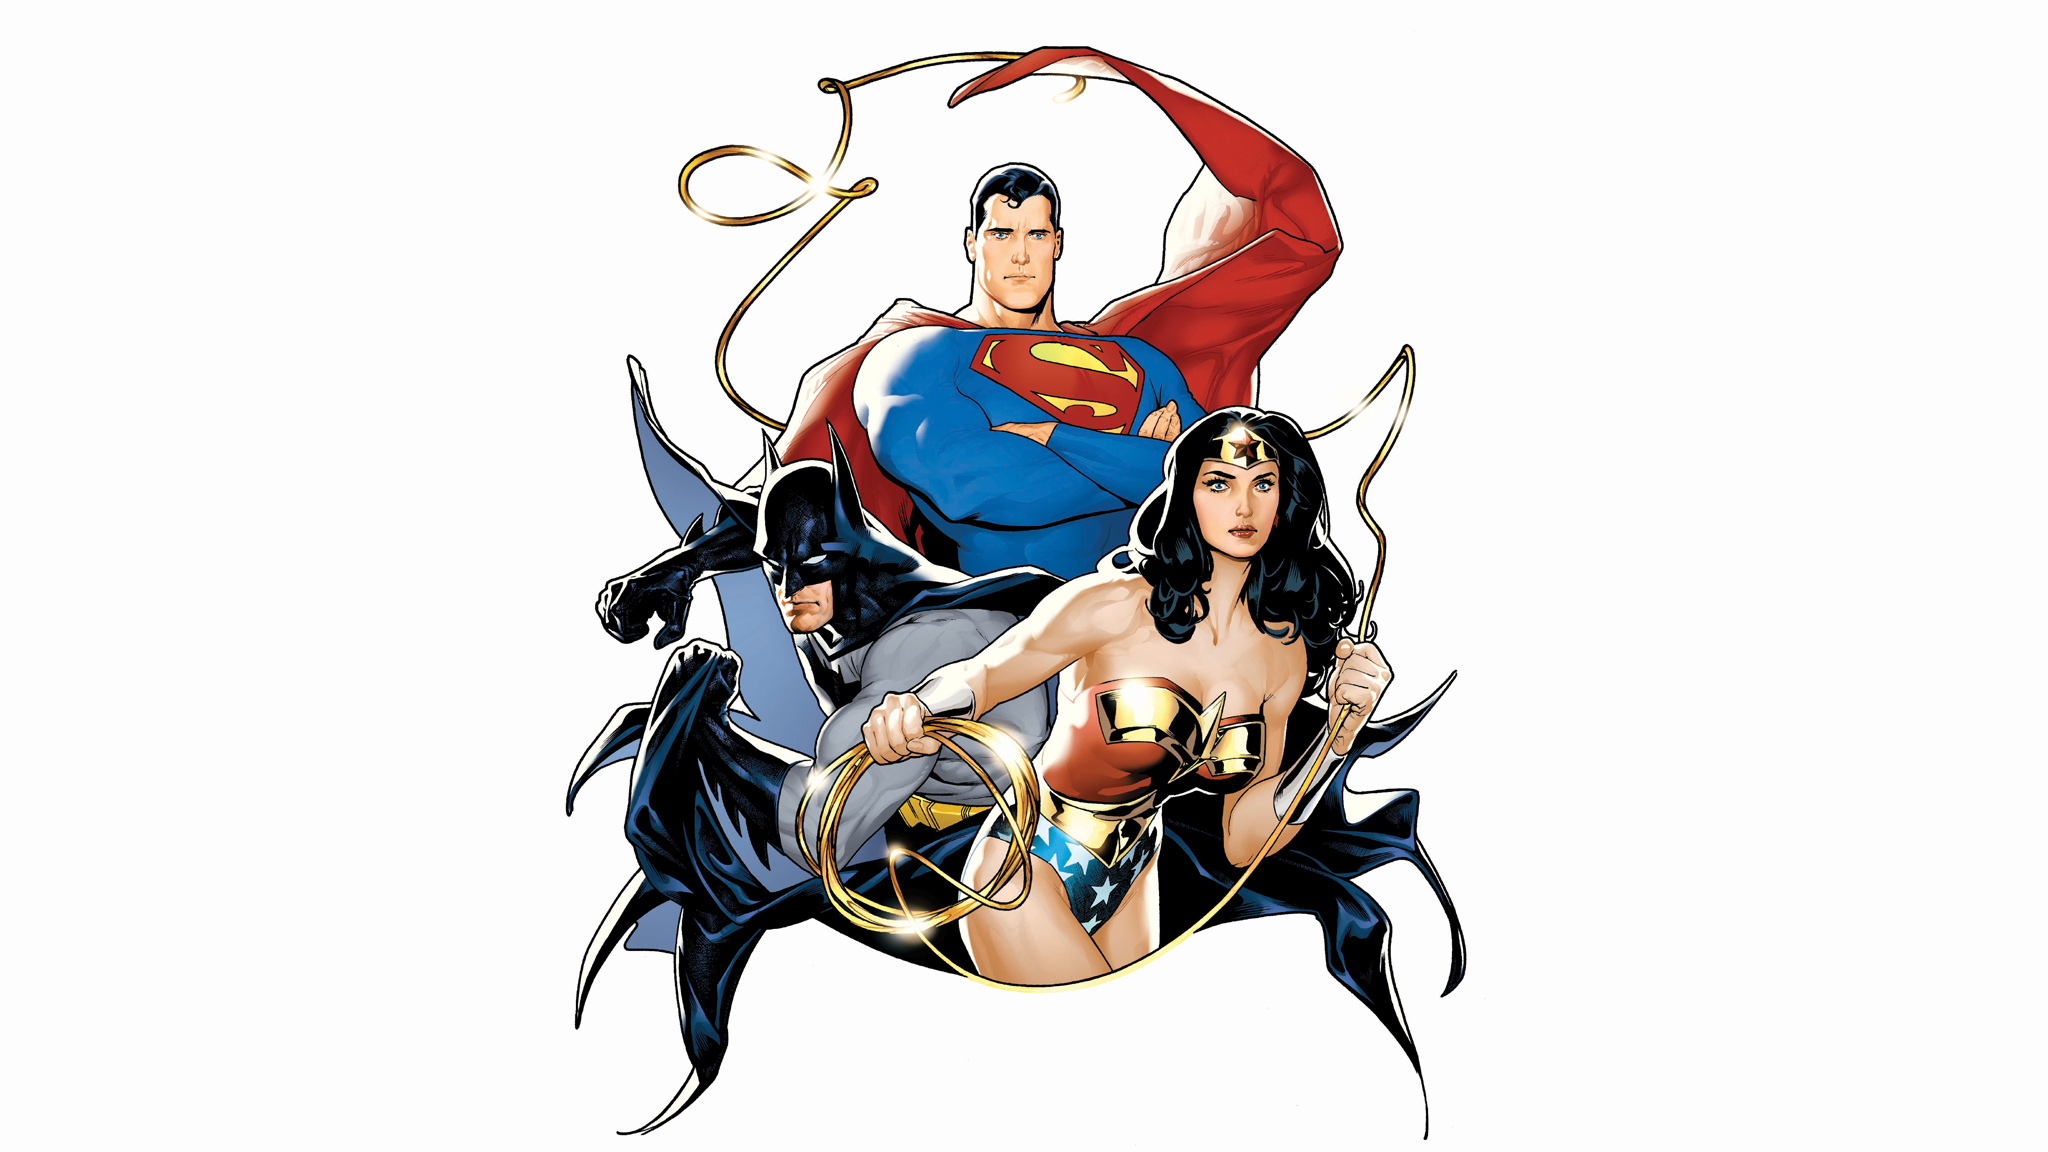 Descarga gratuita de fondo de pantalla para móvil de Liga De La Justicia, La Mujer Maravilla, Superhombre, Hombre Murciélago, Historietas, Dc Comics.